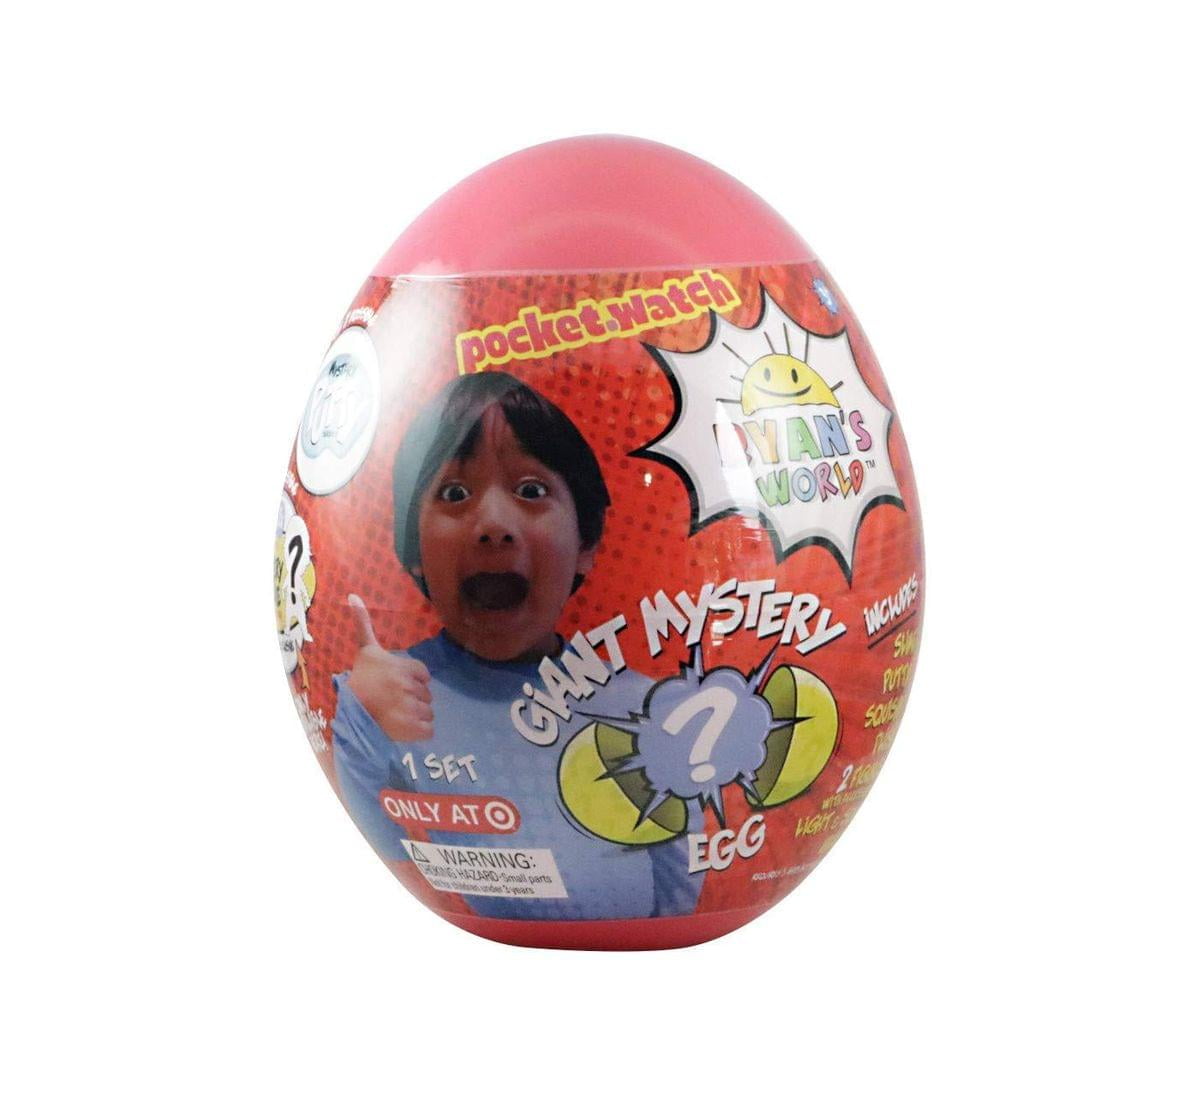 ryan's big surprise egg